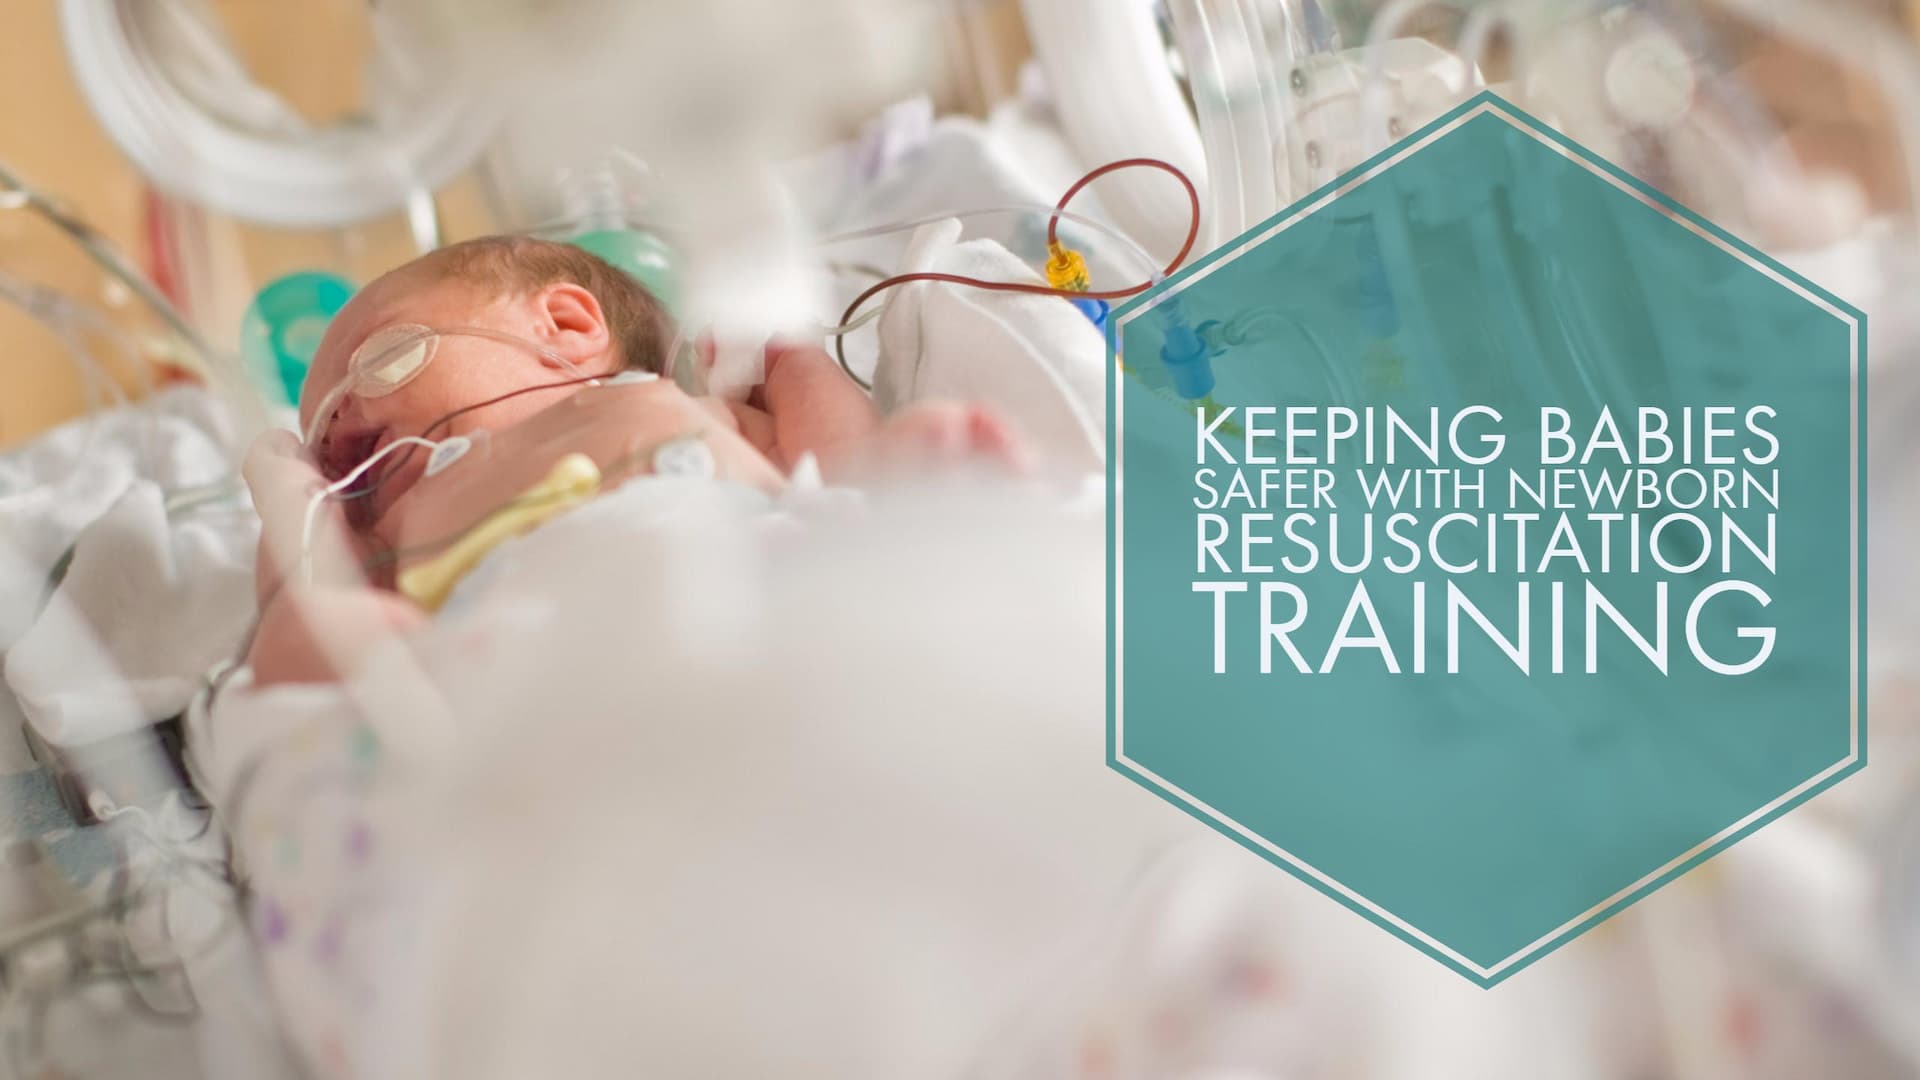 Increased Newborn Resuscitation Training Keeps Babies Safer